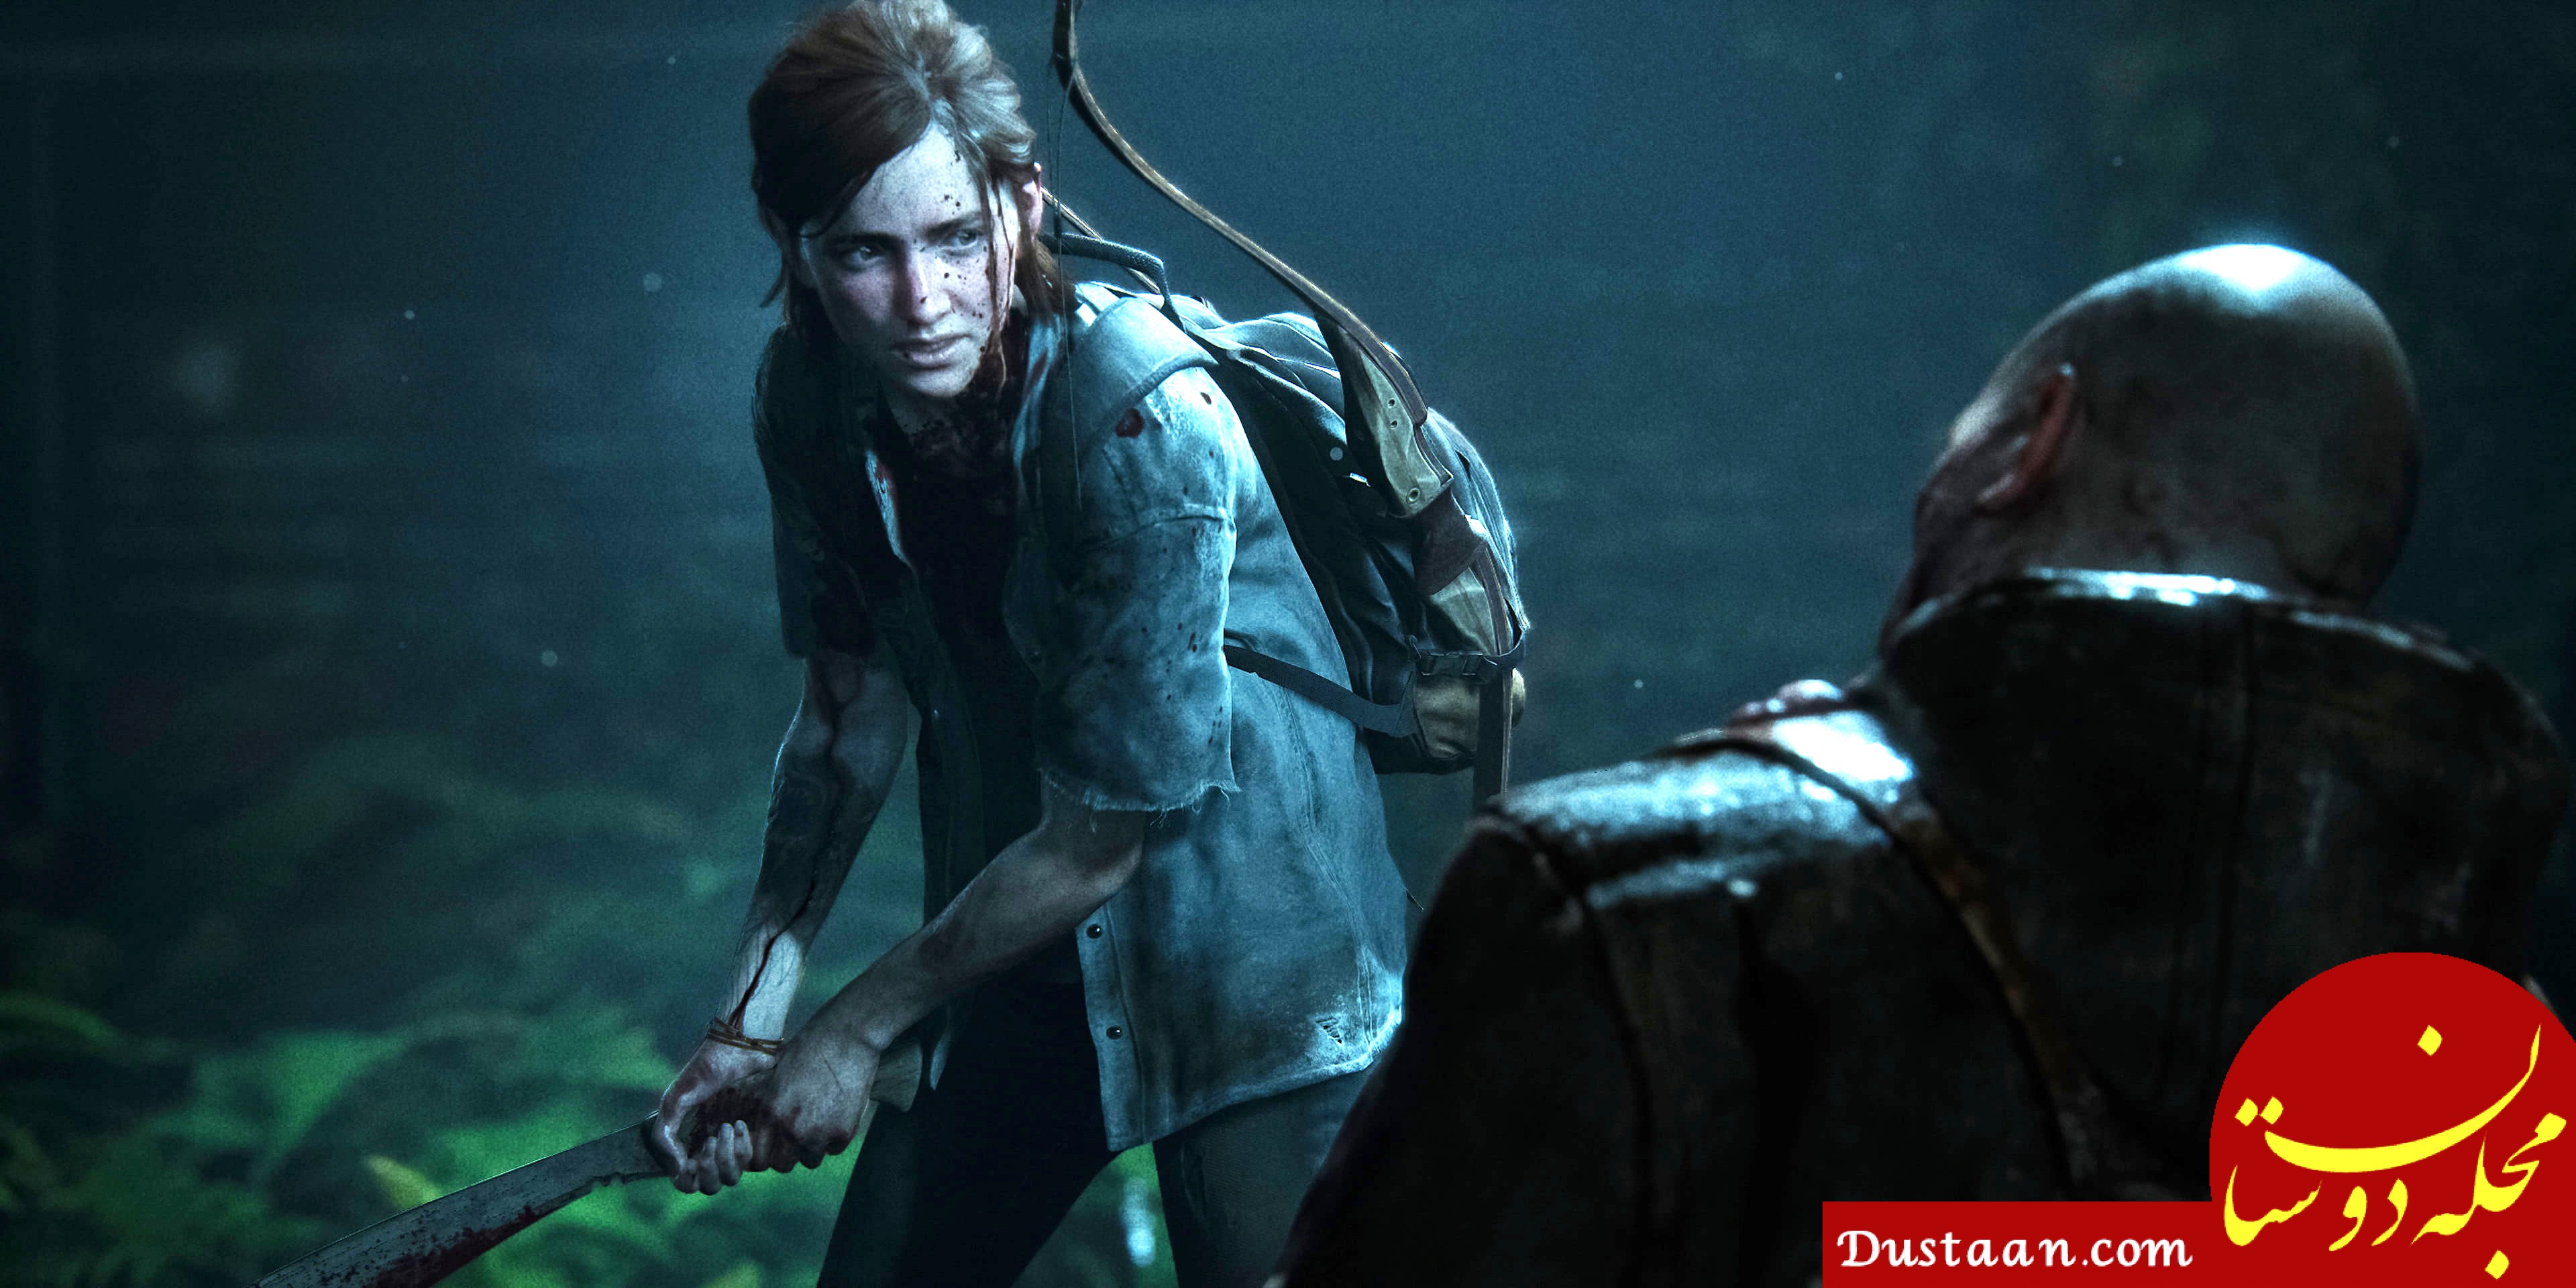 www.dustaan.com-زمان عرضه بازی The Last of Us 2 مشخص شد